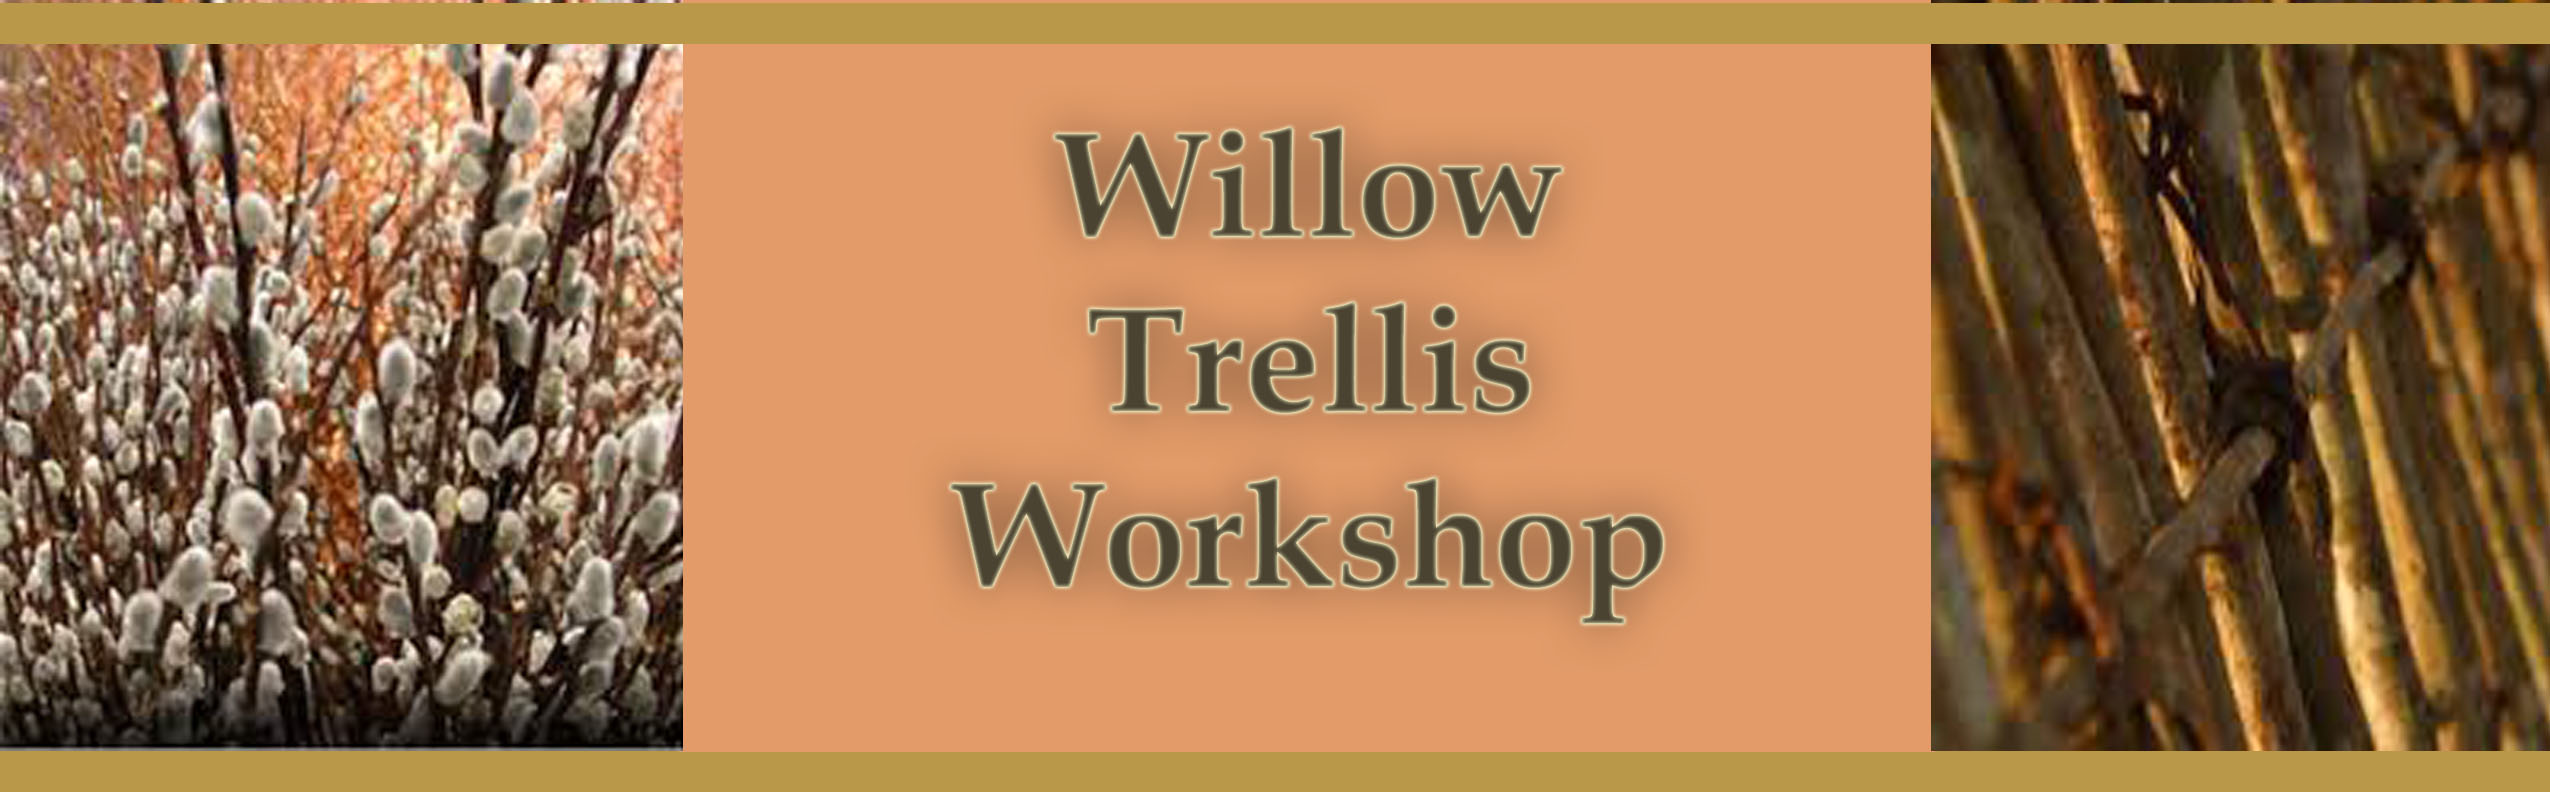 Willow Trellis Workshop